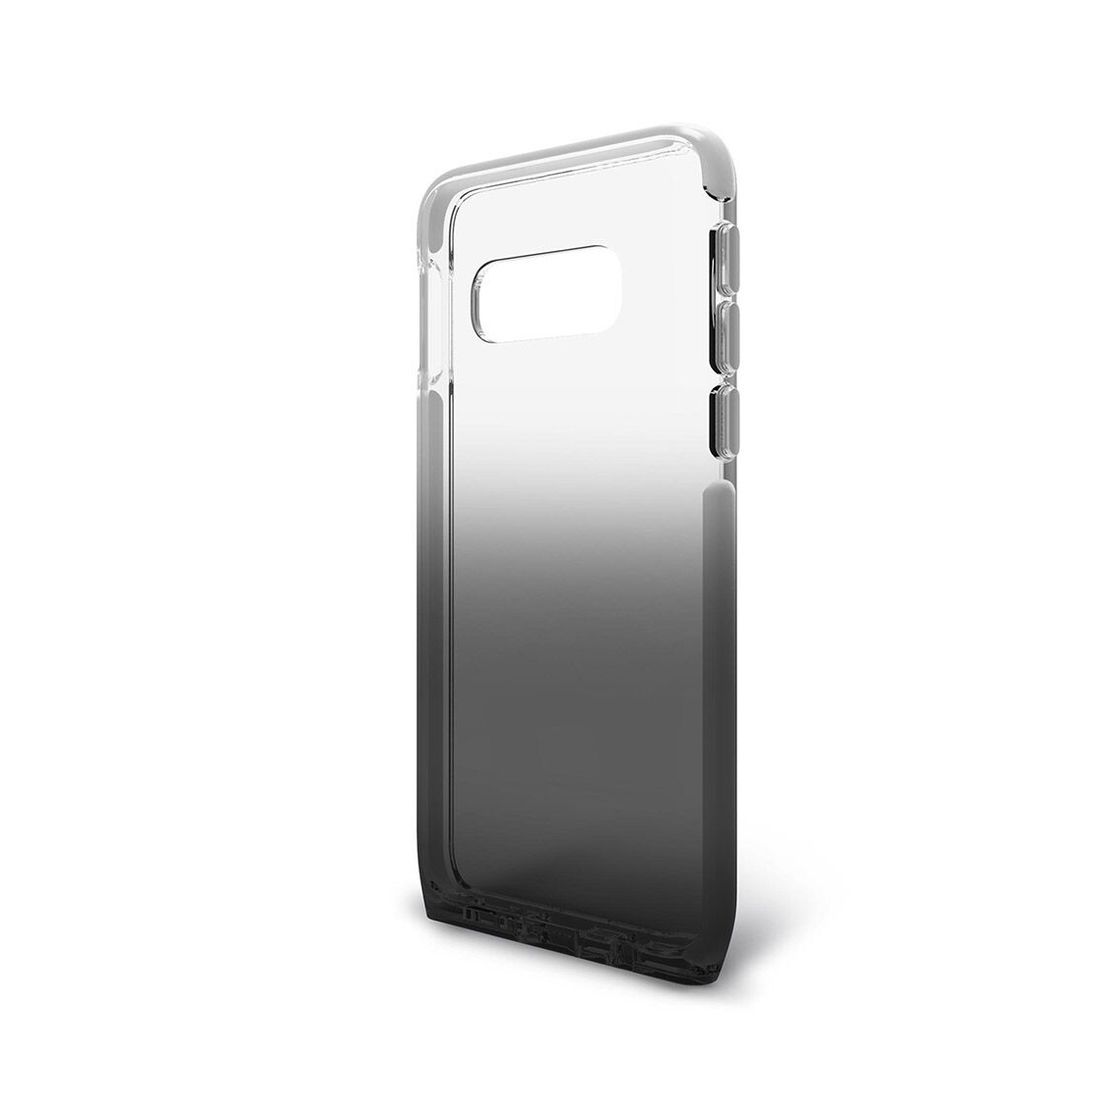 BodyGuardz Harmony Shade Case Clear/Smoke for Galaxy S10e